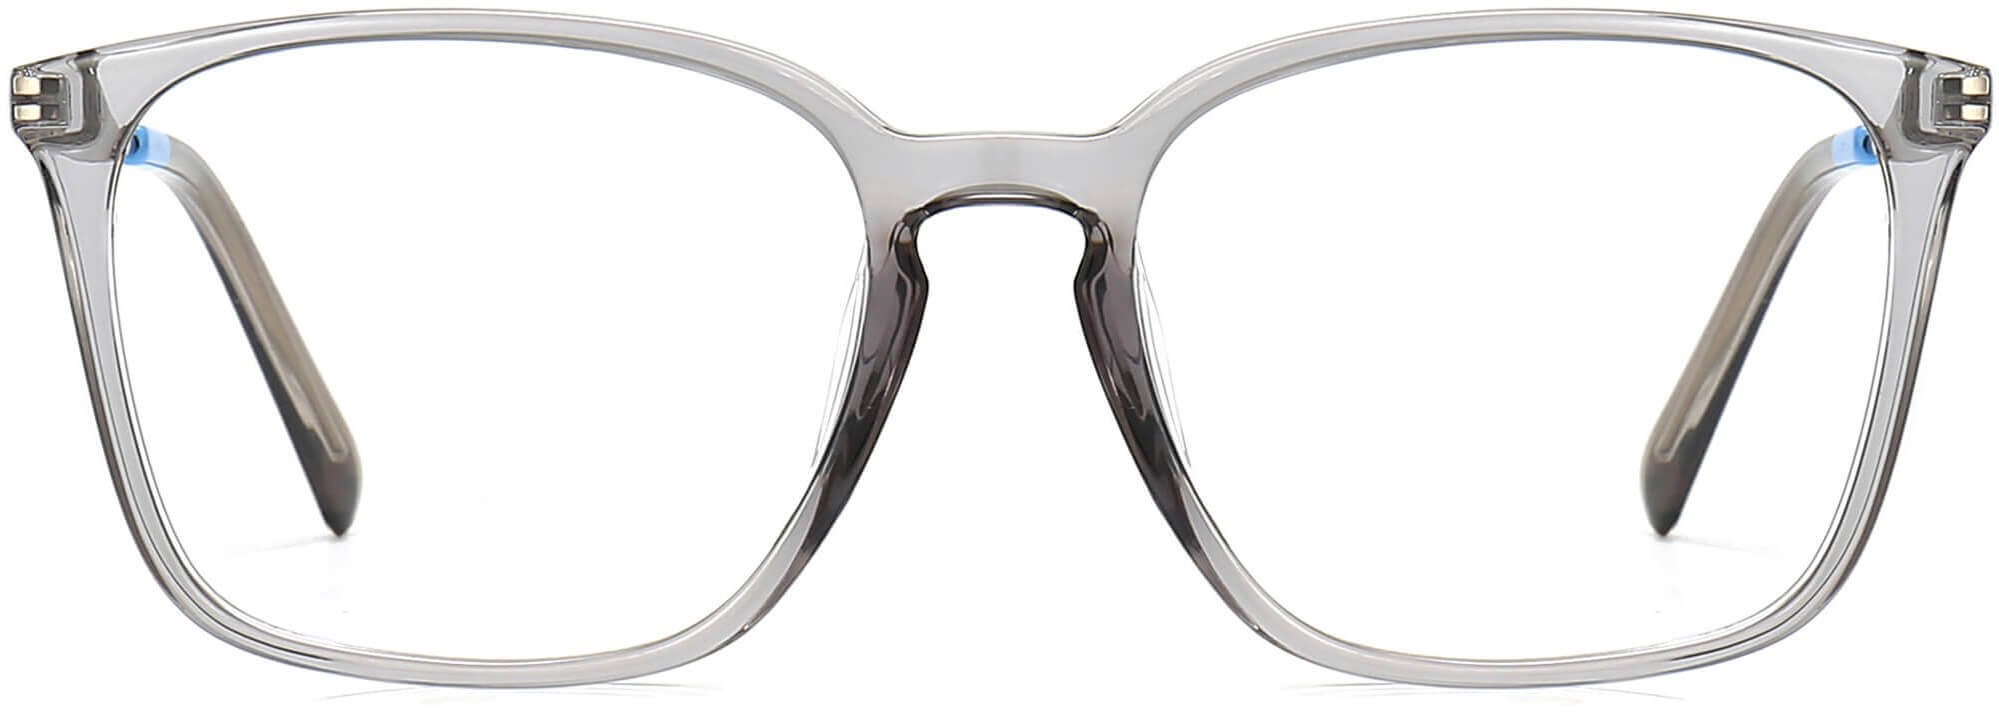 Kieran Square Gray Eyeglasses from ANRRI, front view